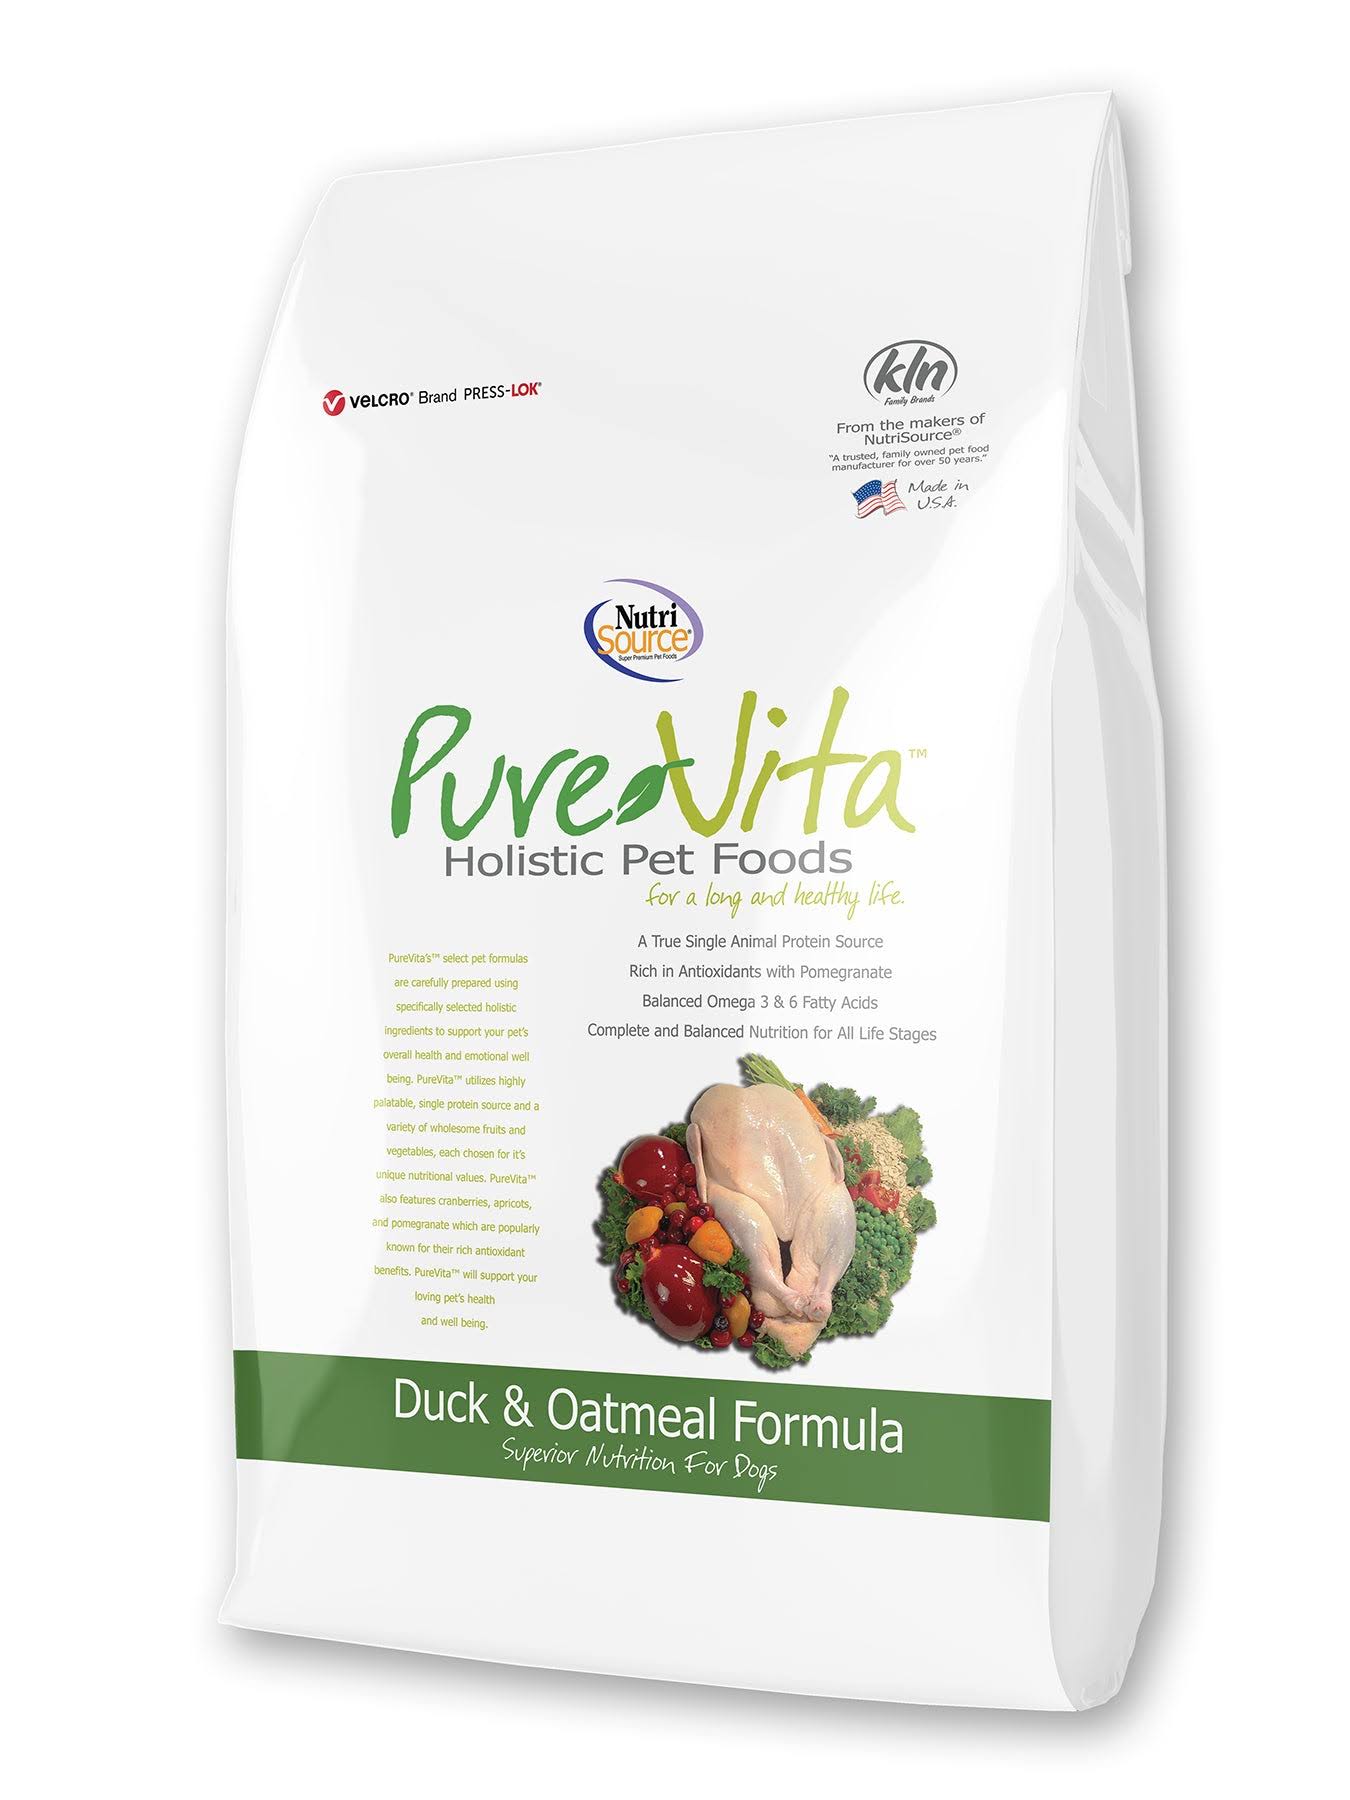 PureVita Pure Vita Dry Dog Food - Duck and Oatmeal, 25lbs